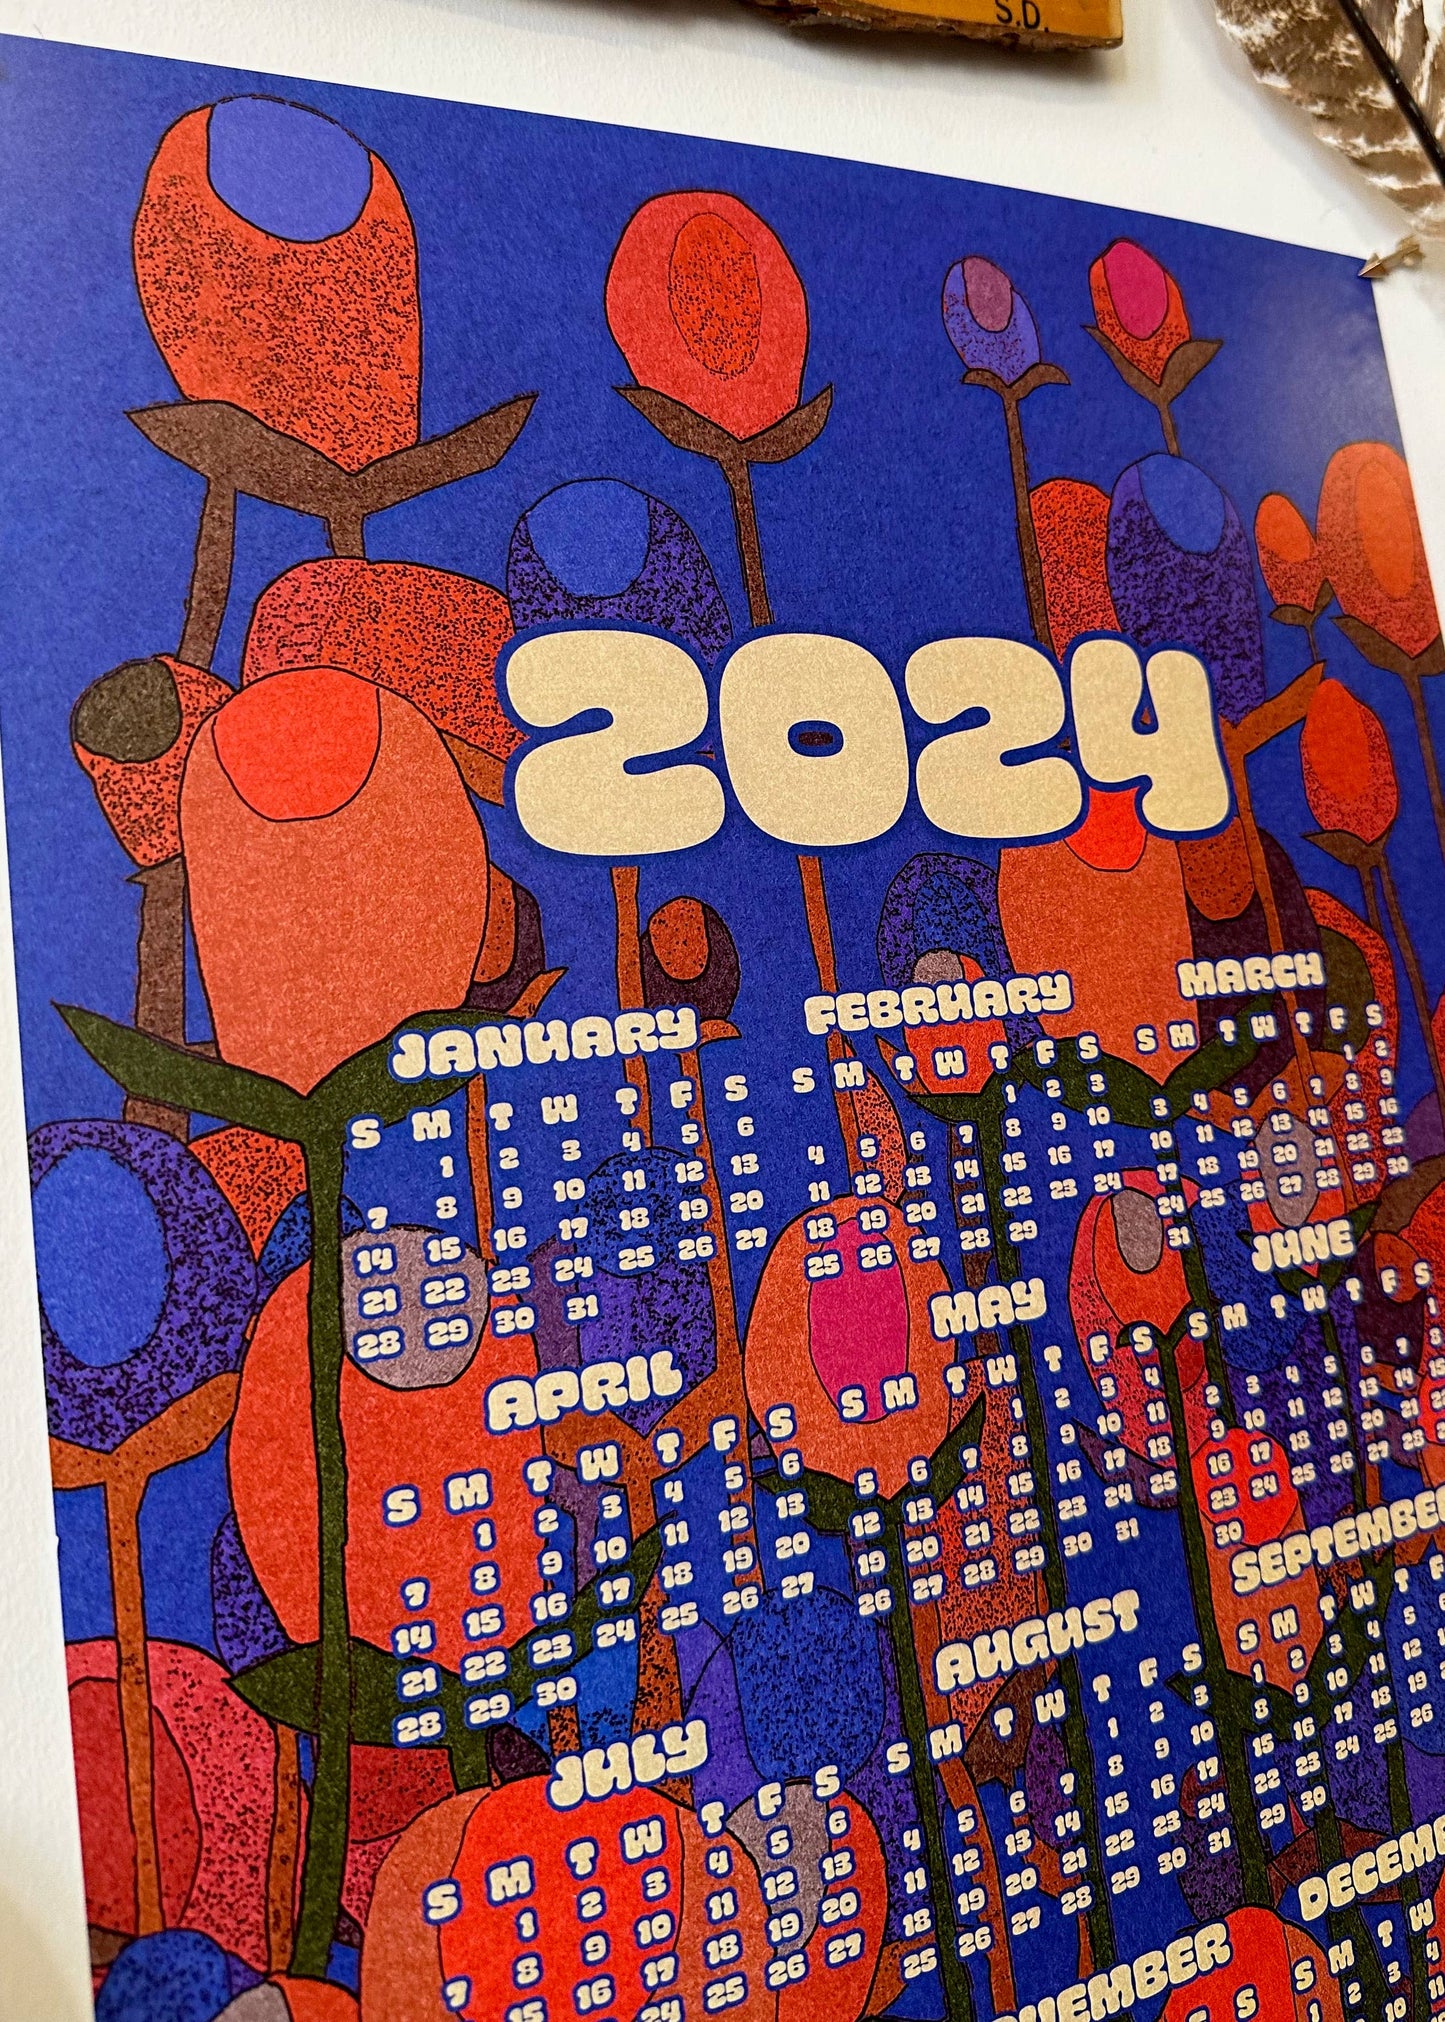 2024 wall calendar-13 x 19 poster-Moody Blue - Las Ofrendas 